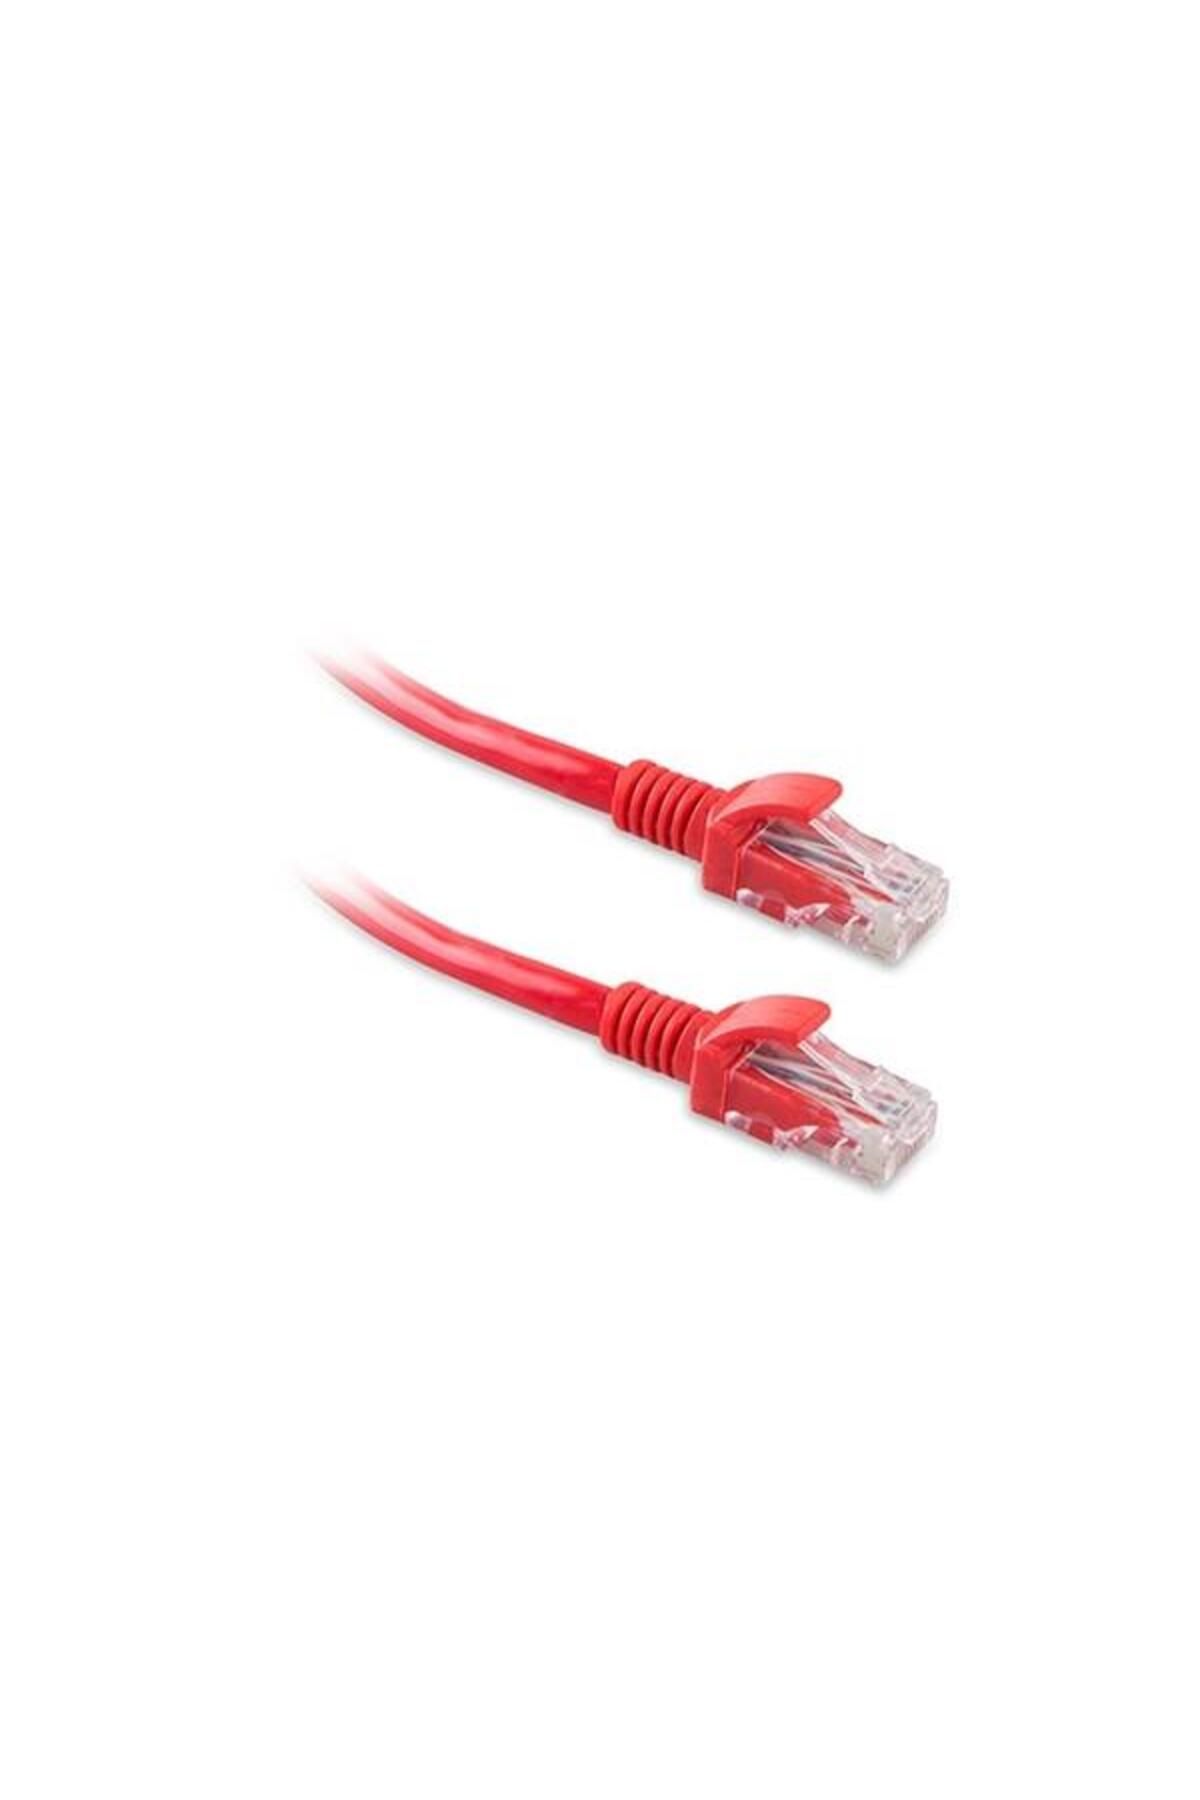 Genel Markalar Sl-cat605re 5m Kırmızı Cat6 Patch Kablo